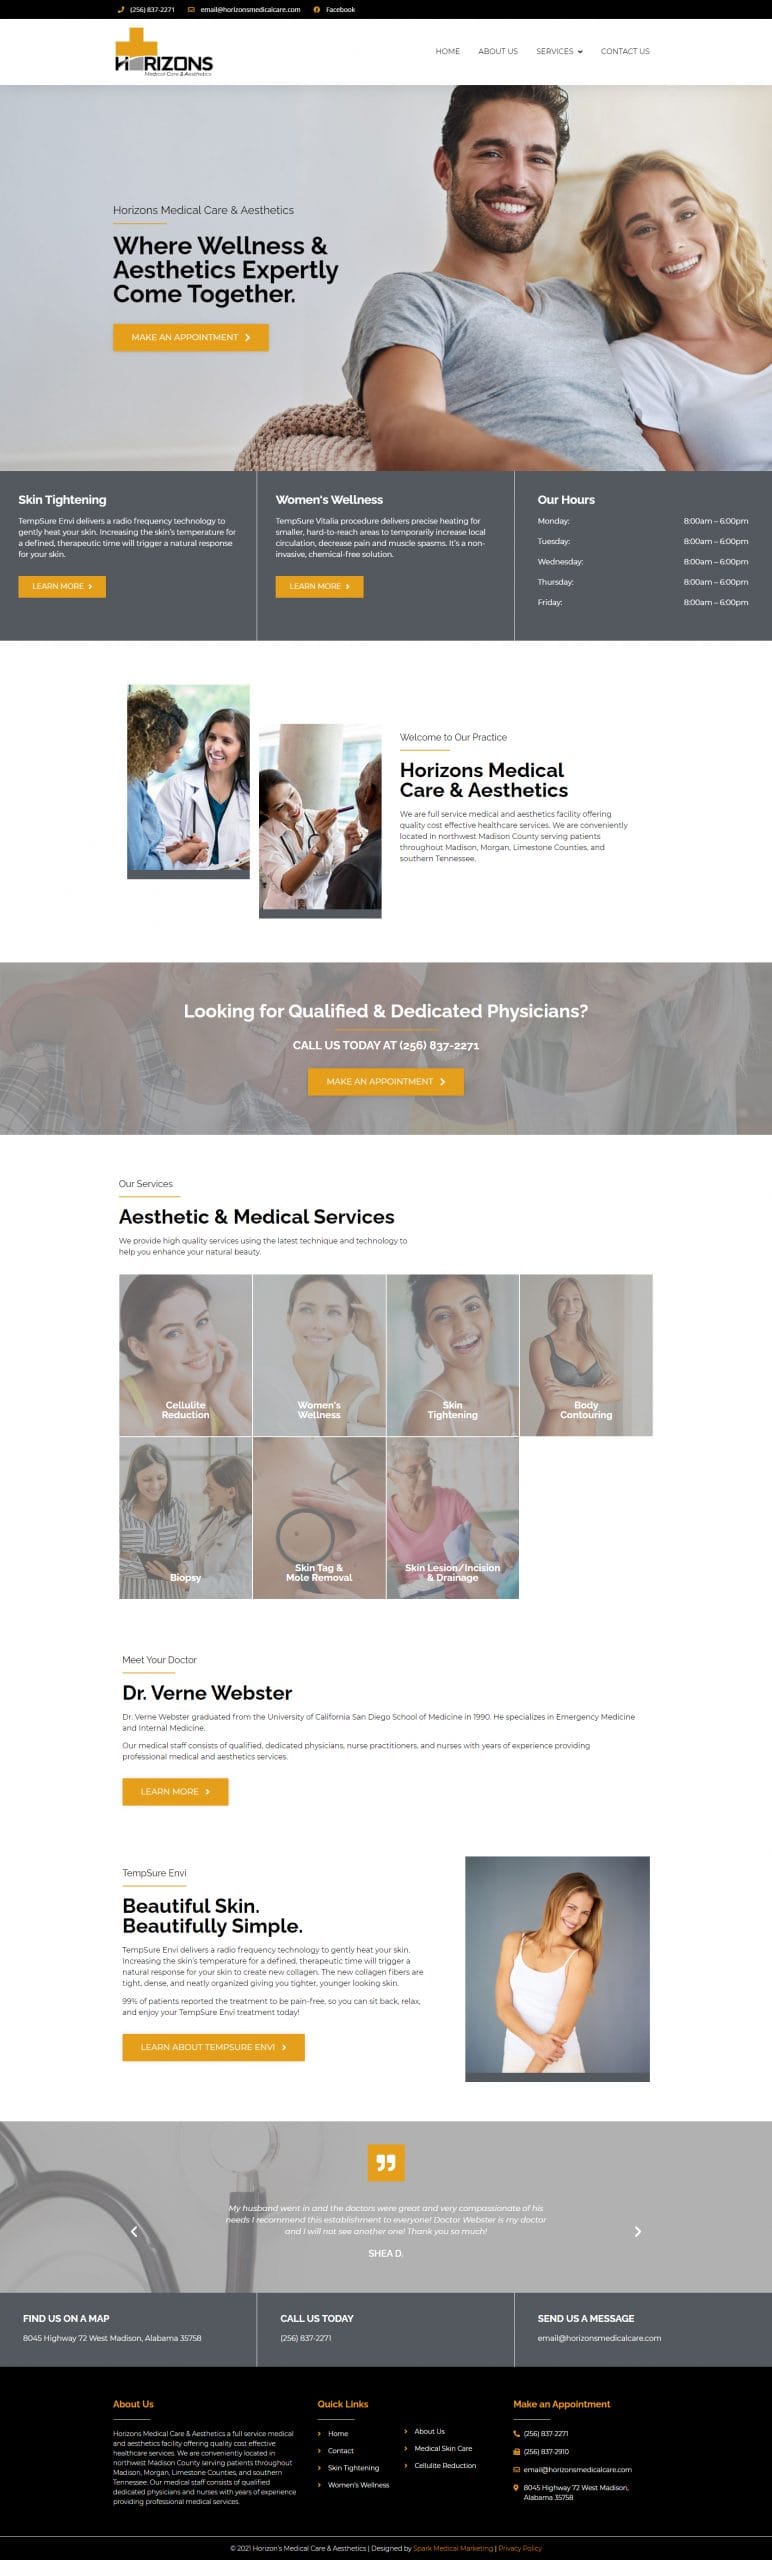 Horizons Medical Care & Aesthetics Homepage Screenshot